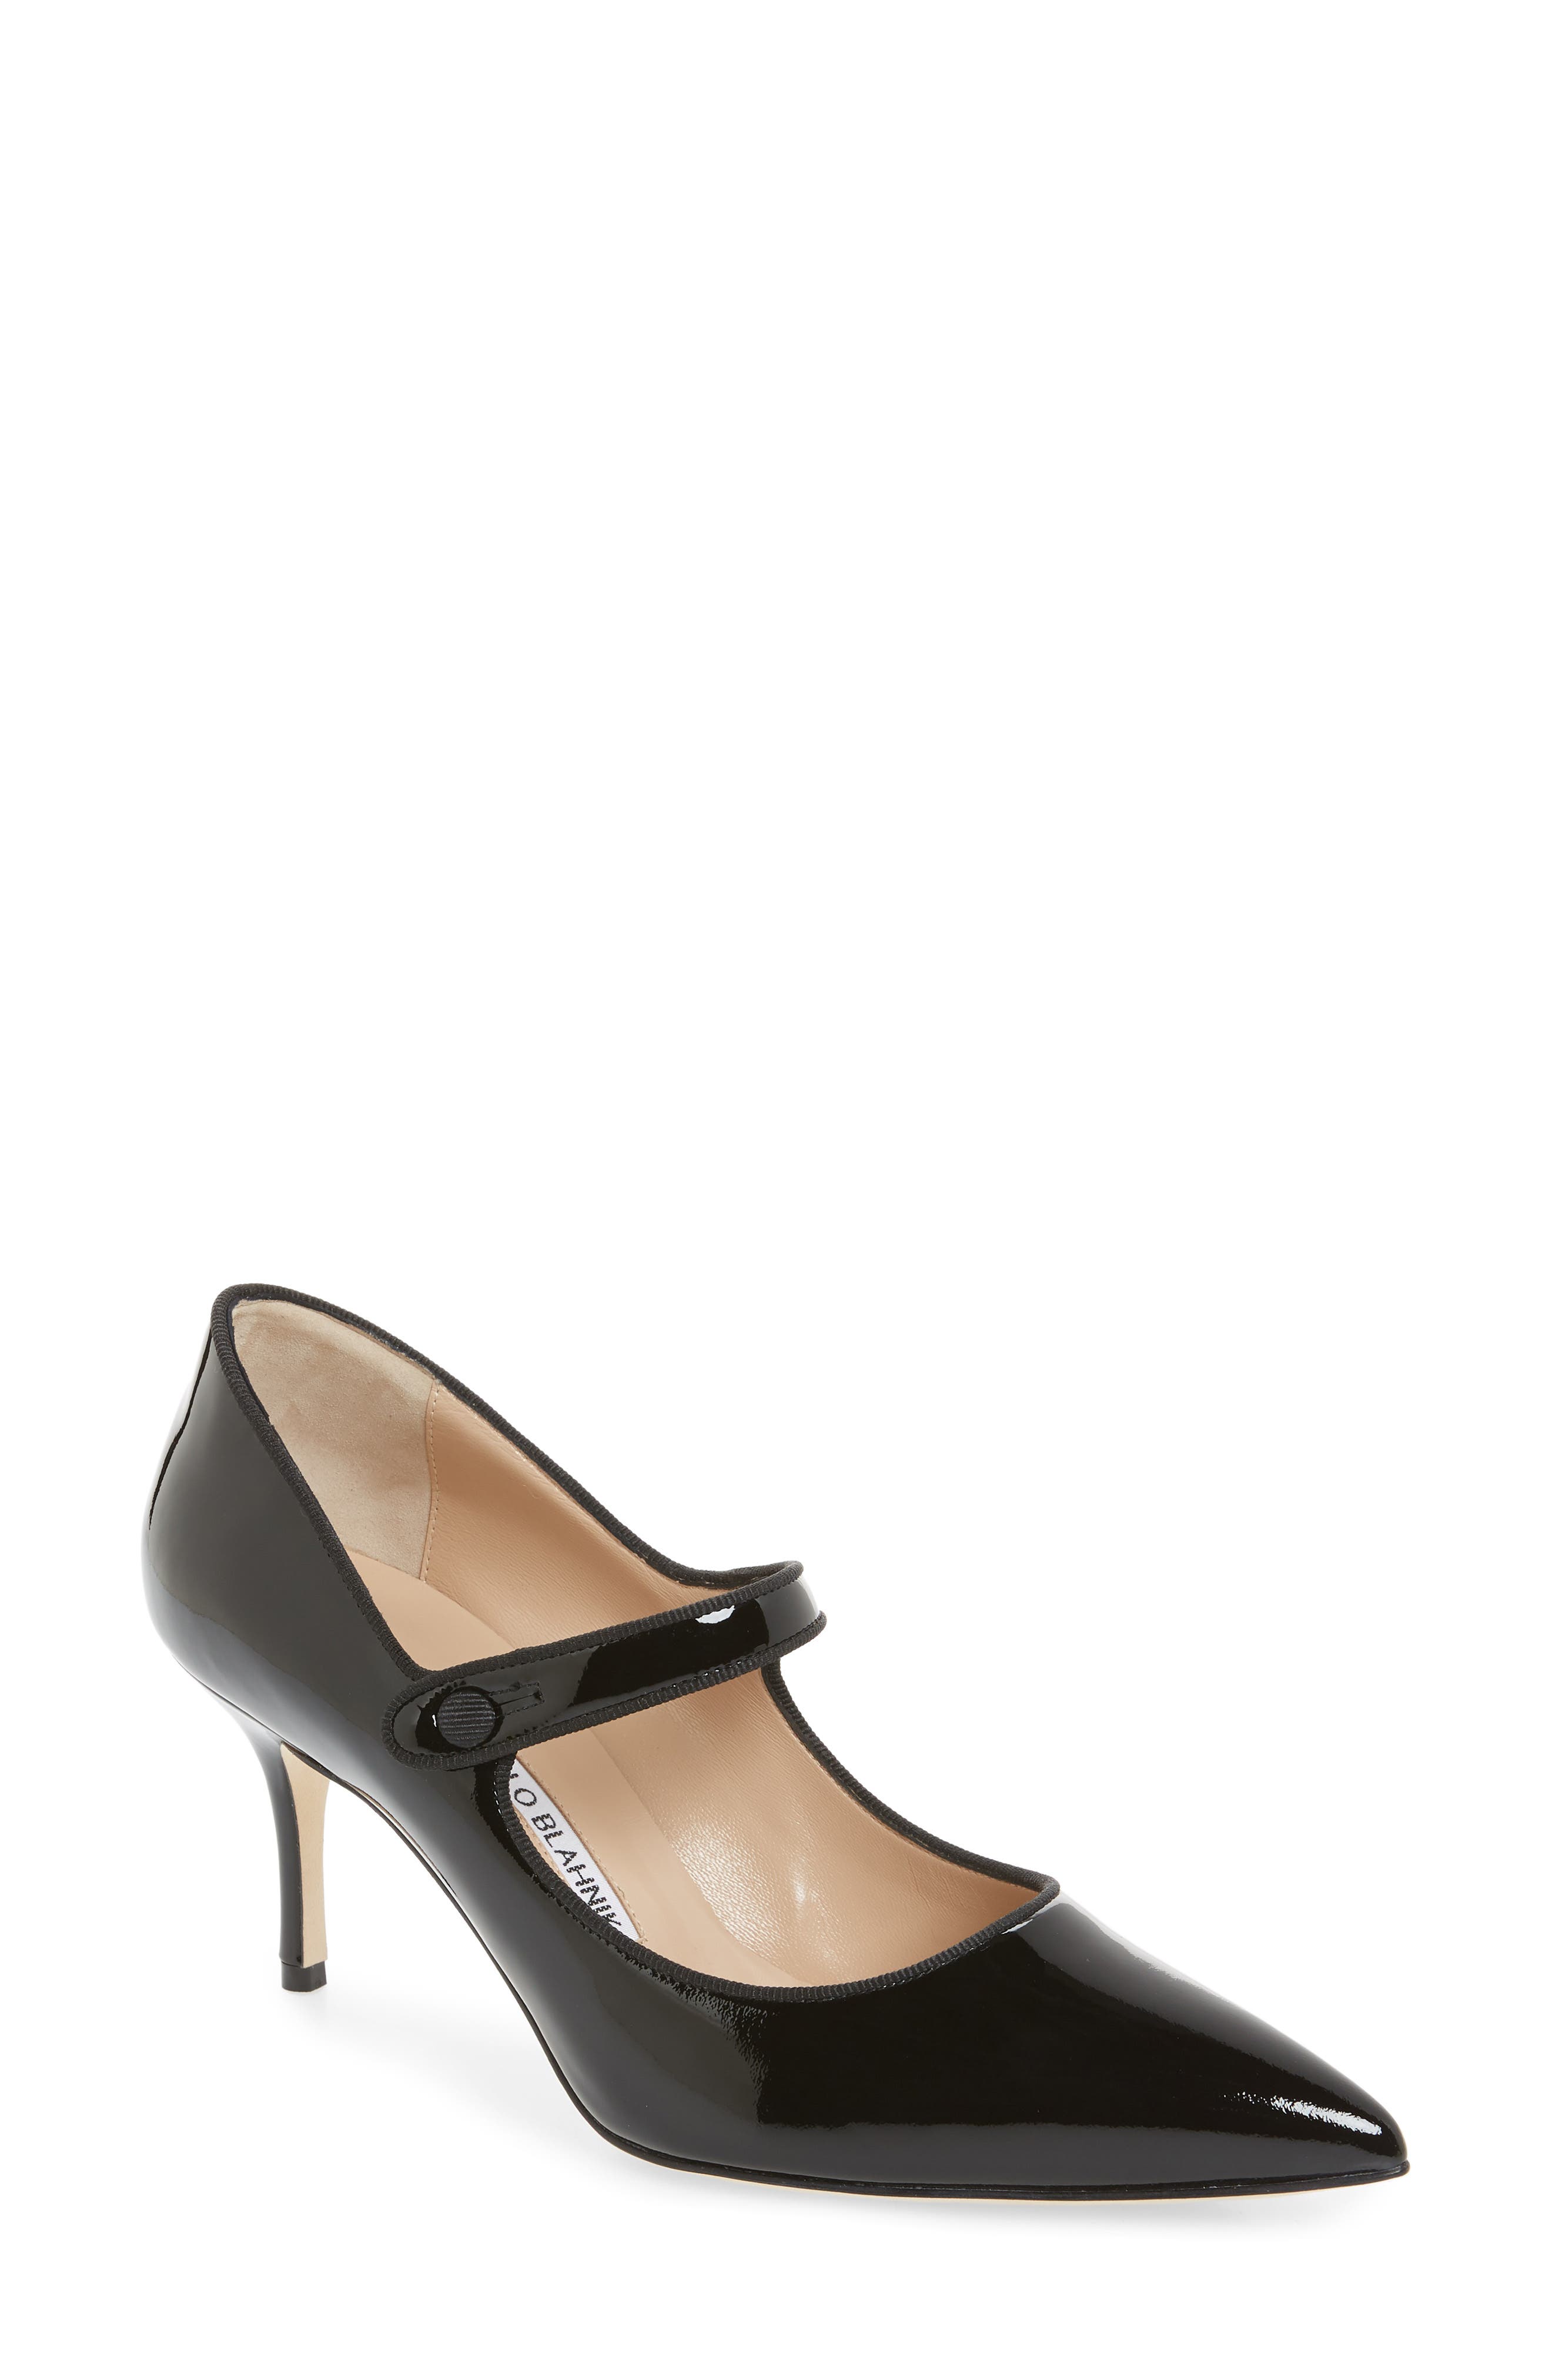 womens black mary jane heels